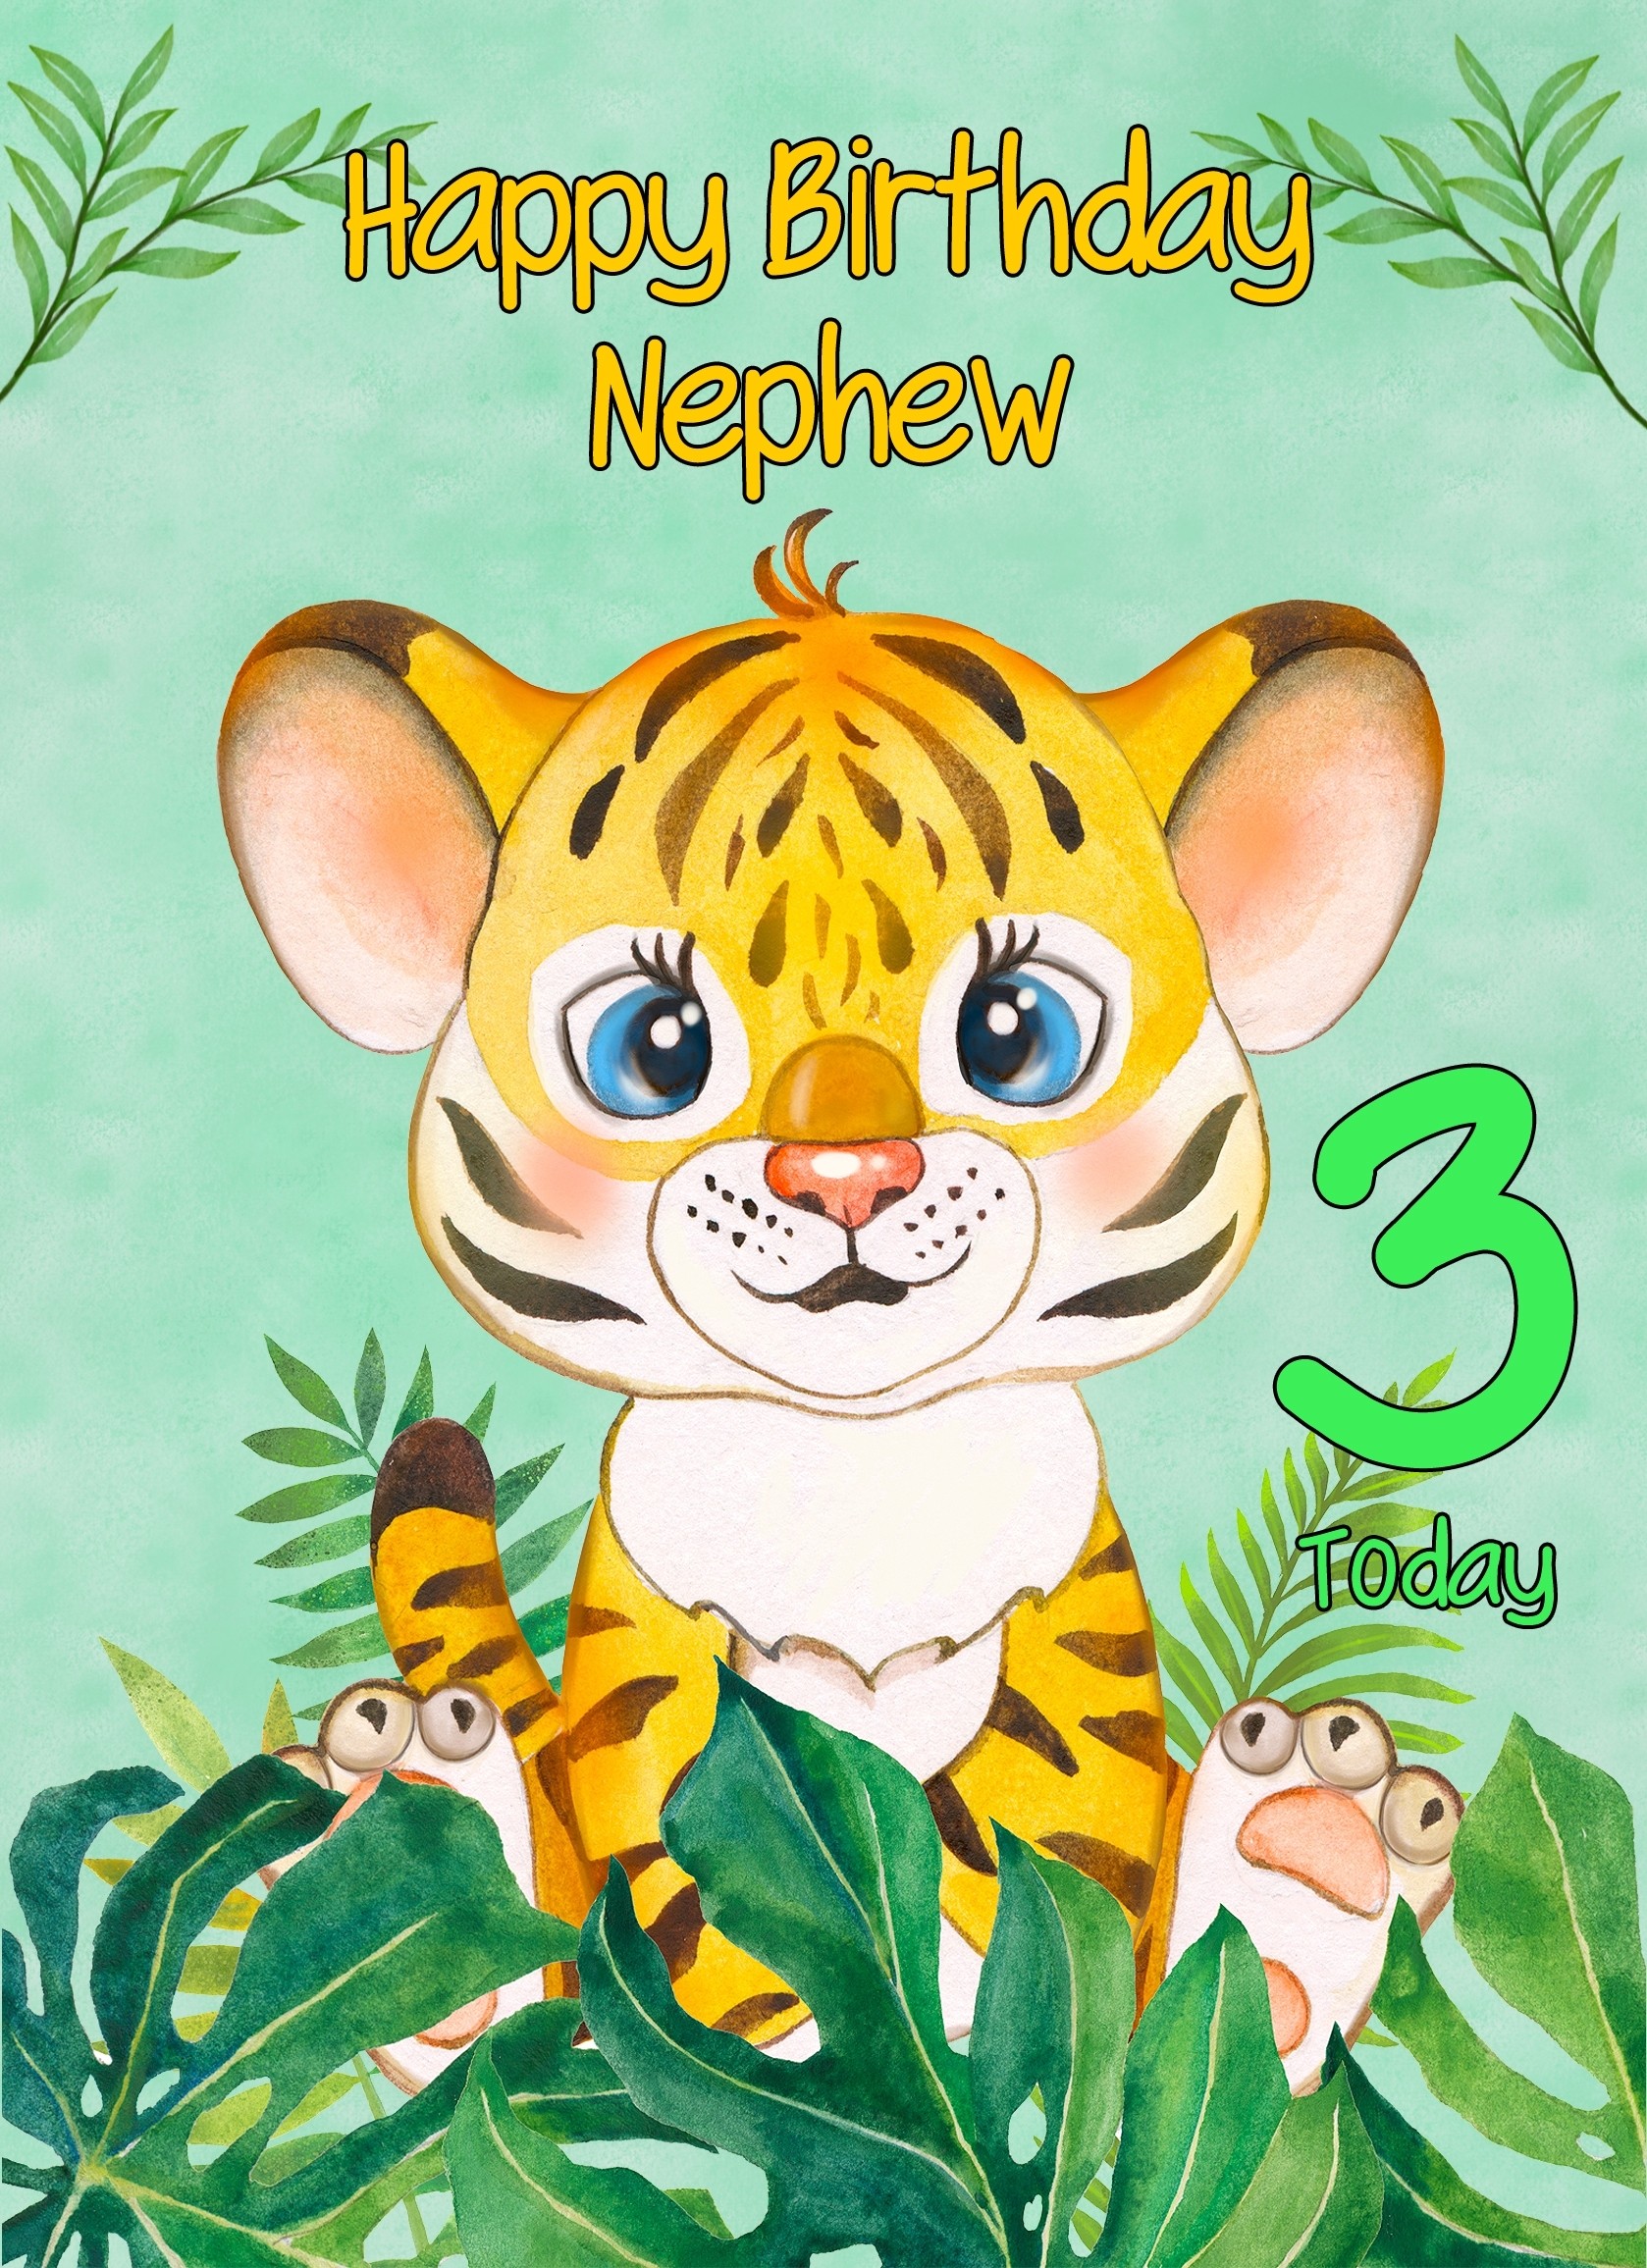 3rd Birthday Card for Nephew (Tiger)